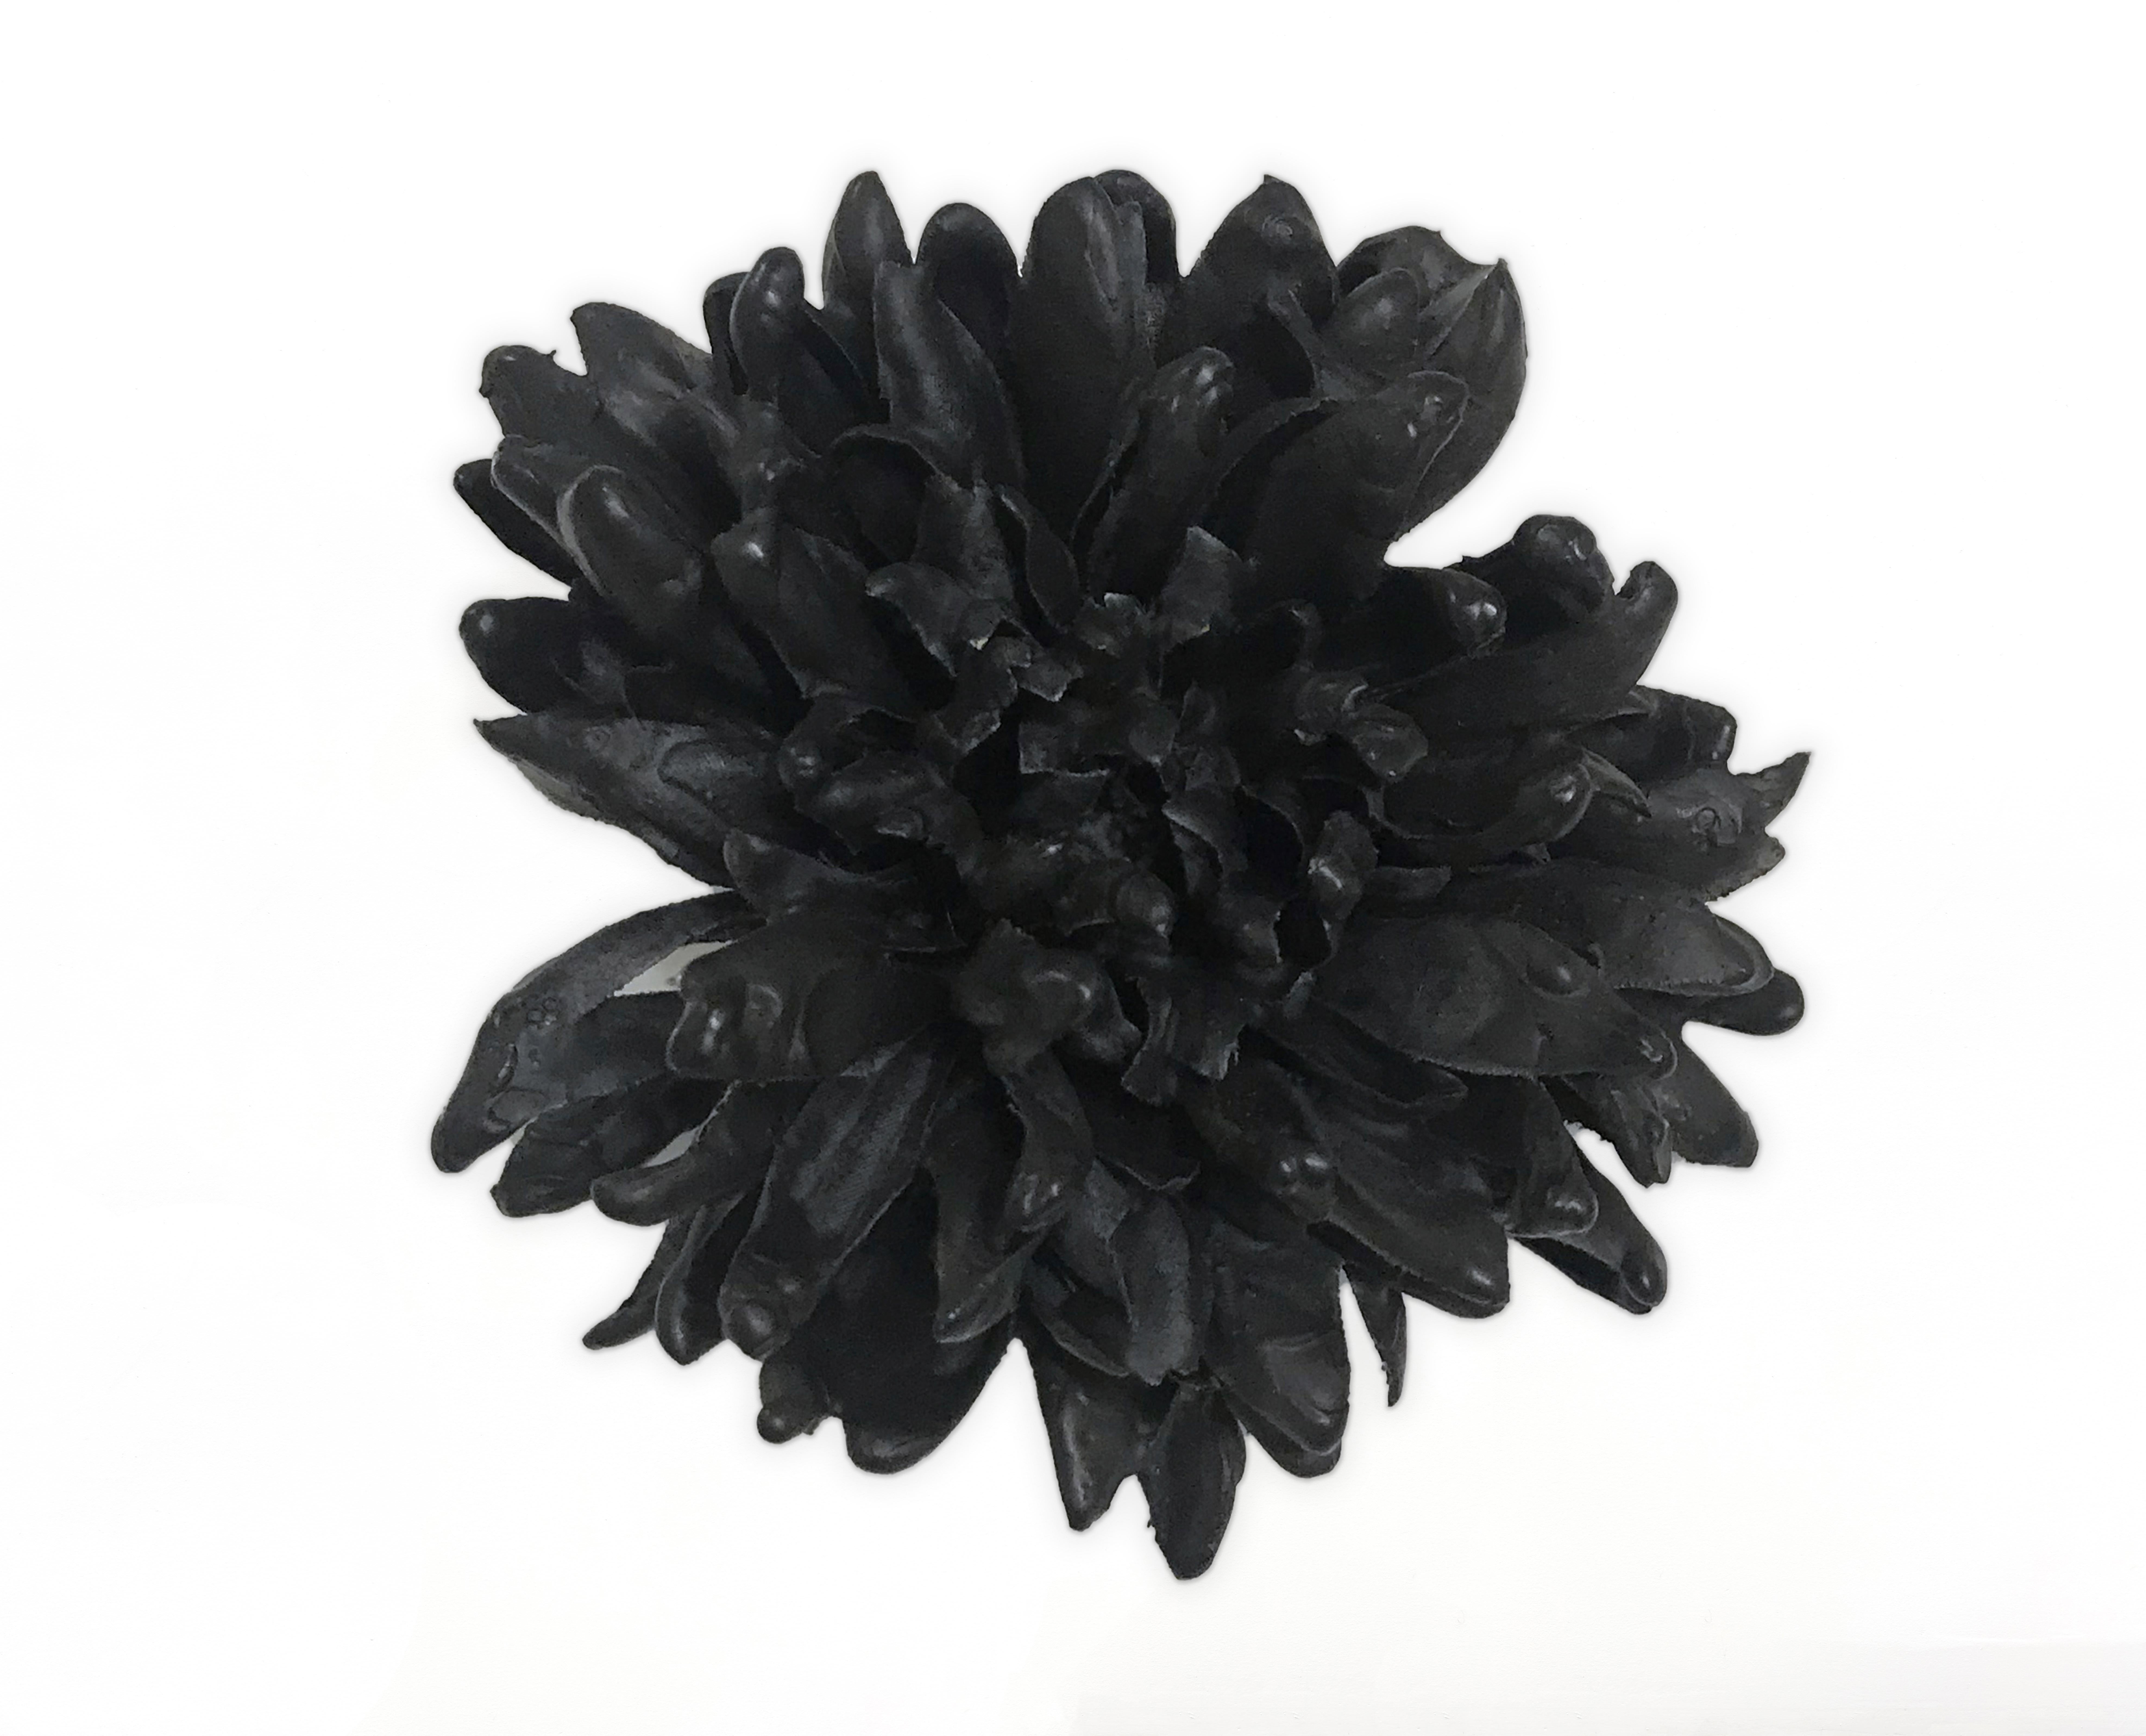 petah coyne Figurative Sculpture - Petah Coyne - Wax Flower, 2005